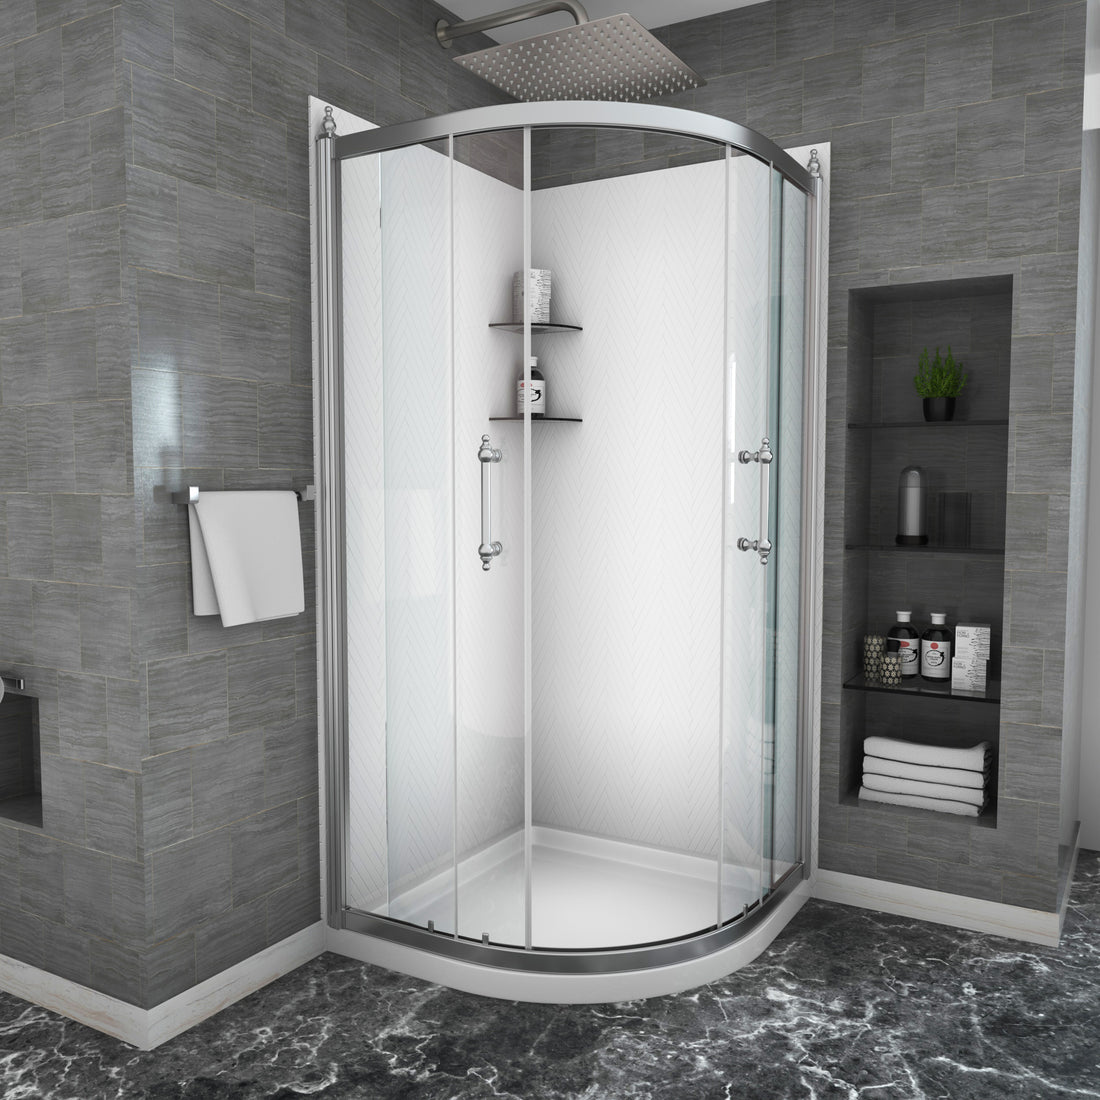 Shower Door 36" x 75" Framed Tub Shower Enclosure in chrome-glass